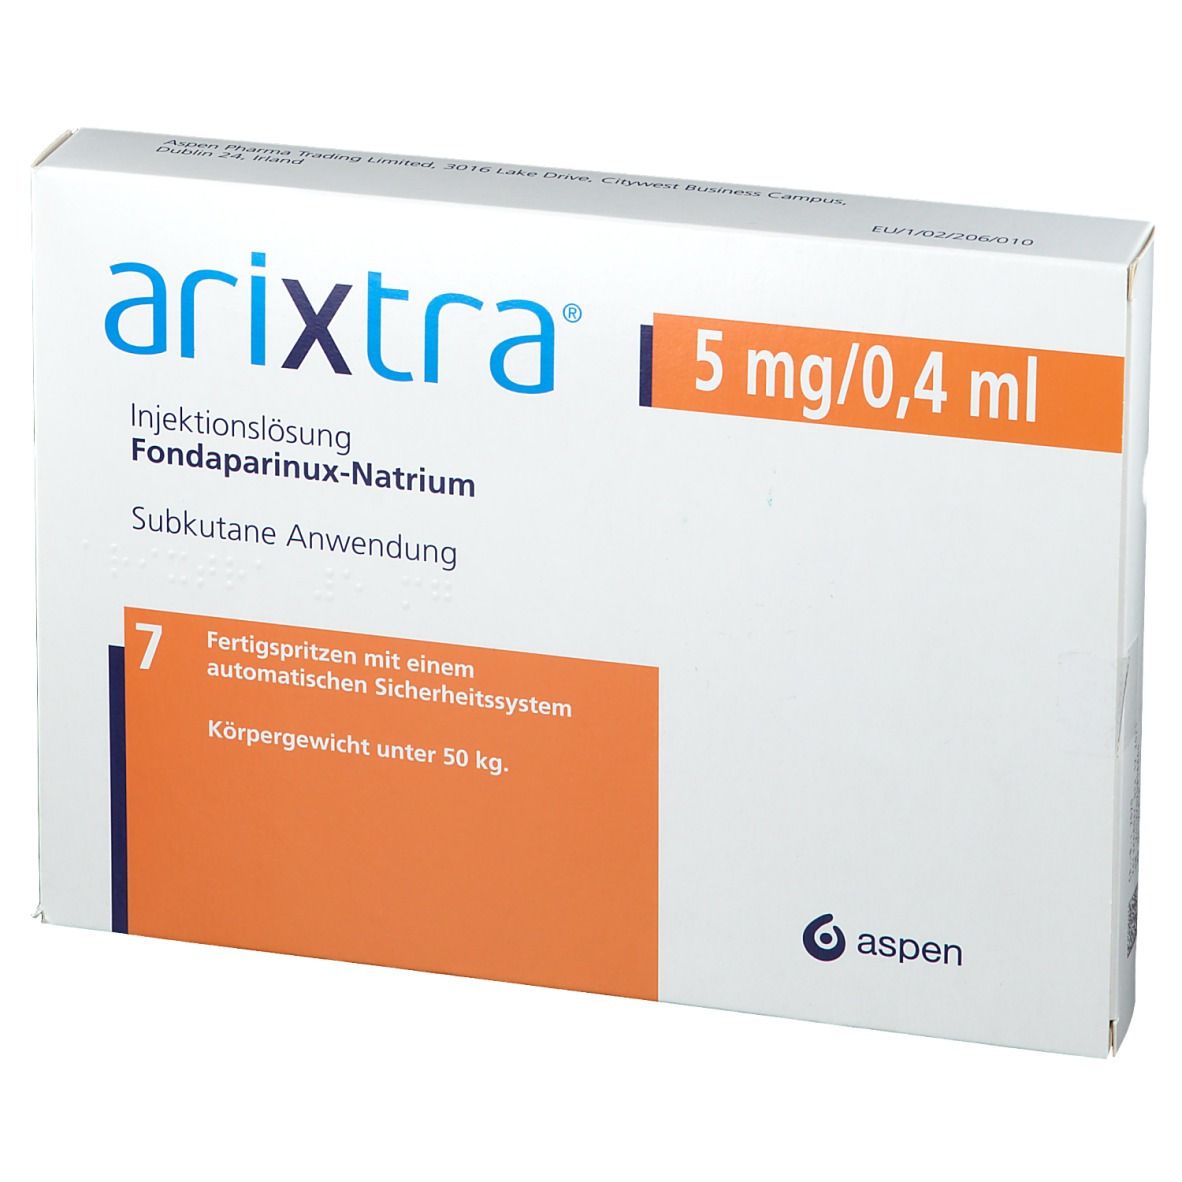 arixtra® 5 mg/0,4 ml